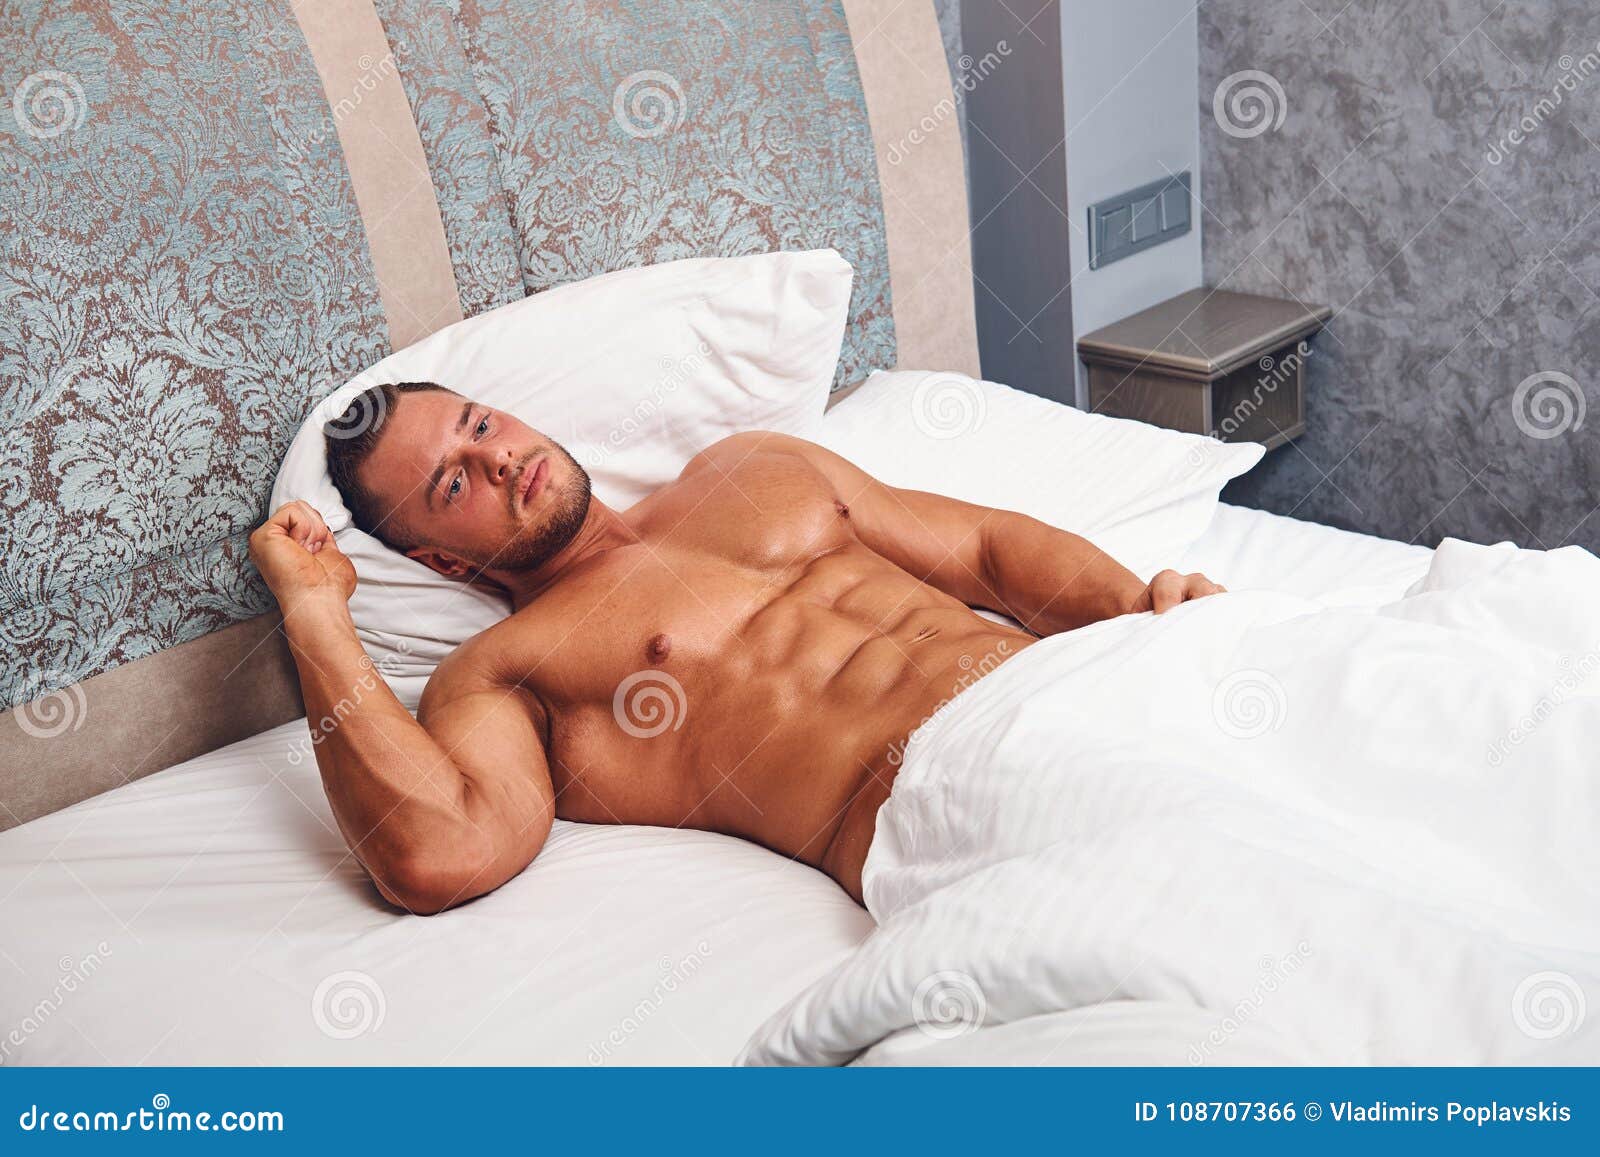 Мужчина в постели марс. Голенький мужчина в кровати. Мускулистый мужчина на кровати.